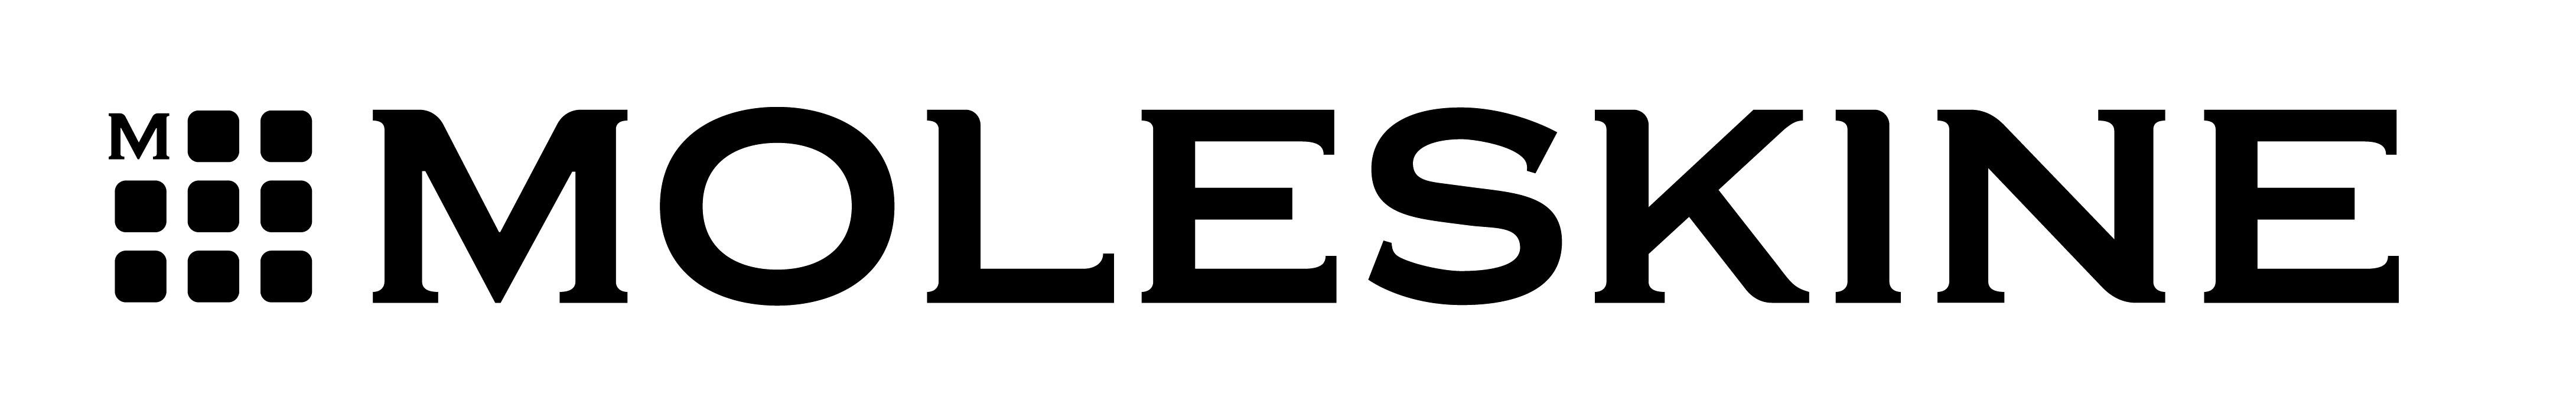 Moleskine-logo